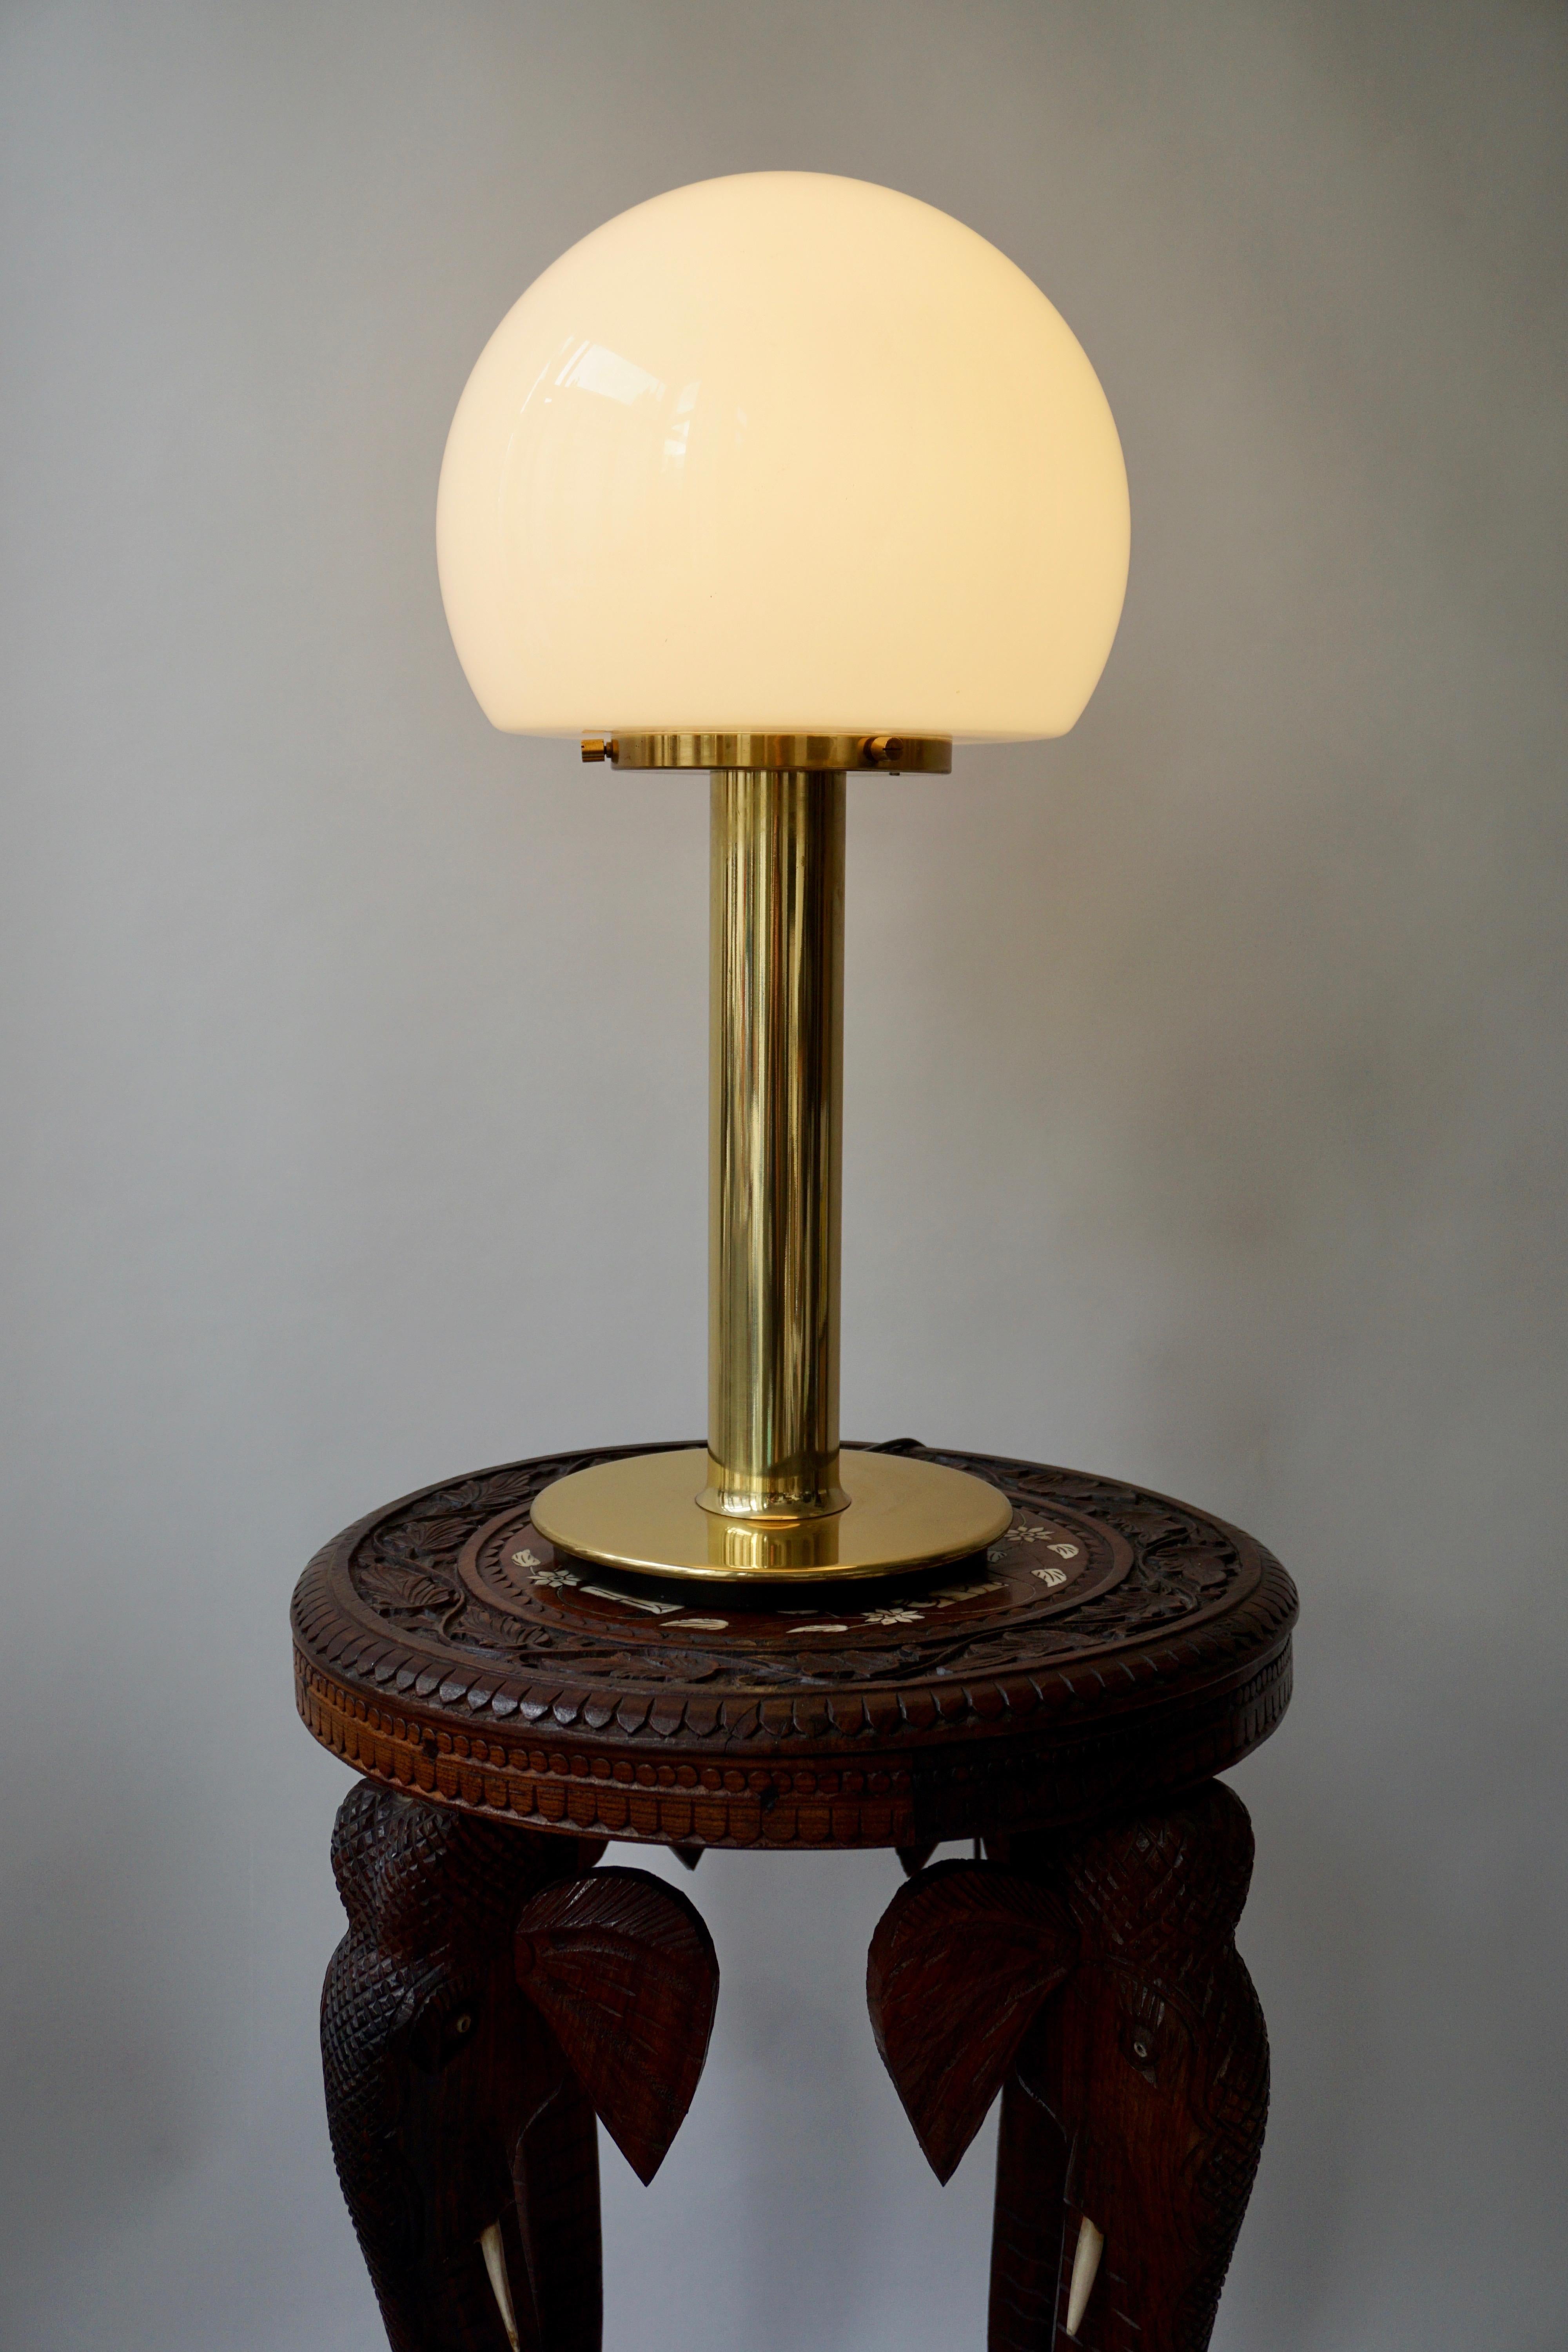 Italian table lamp in brass and glass.
Height 60 cm.
Diameter 30 cm.
Base 20 cm.
One E27 bulb.